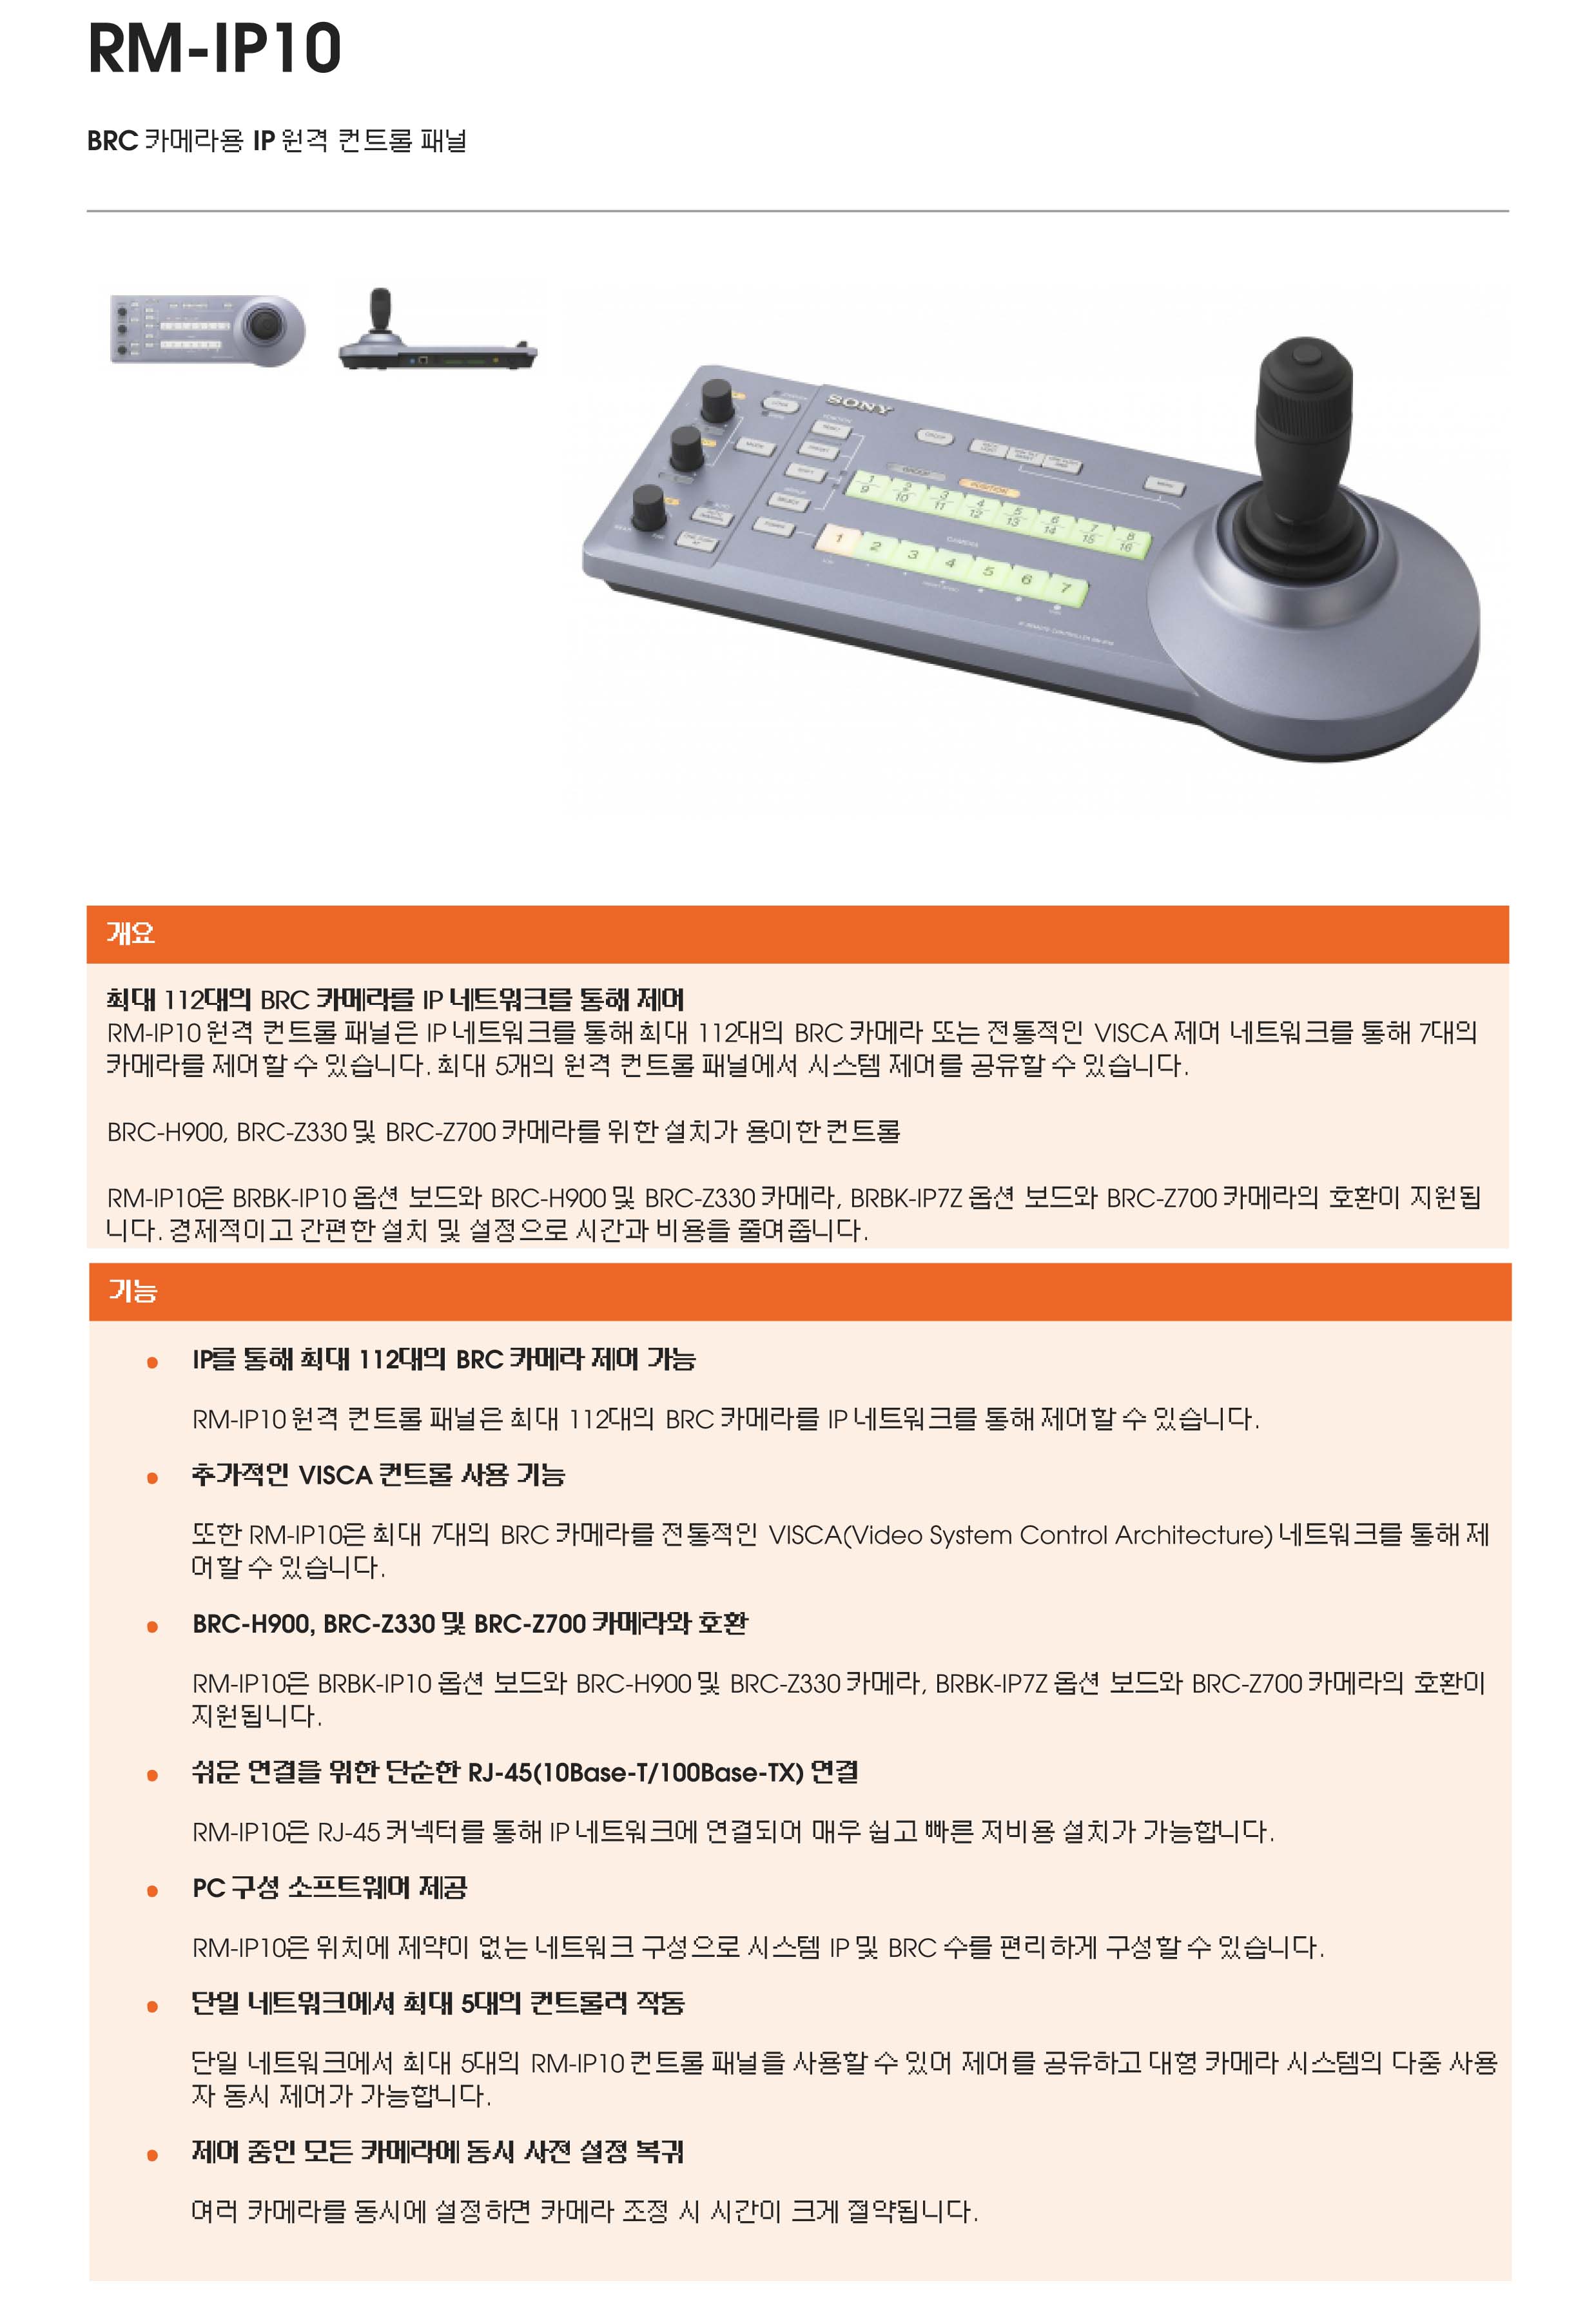 RM-IP10 Brochure